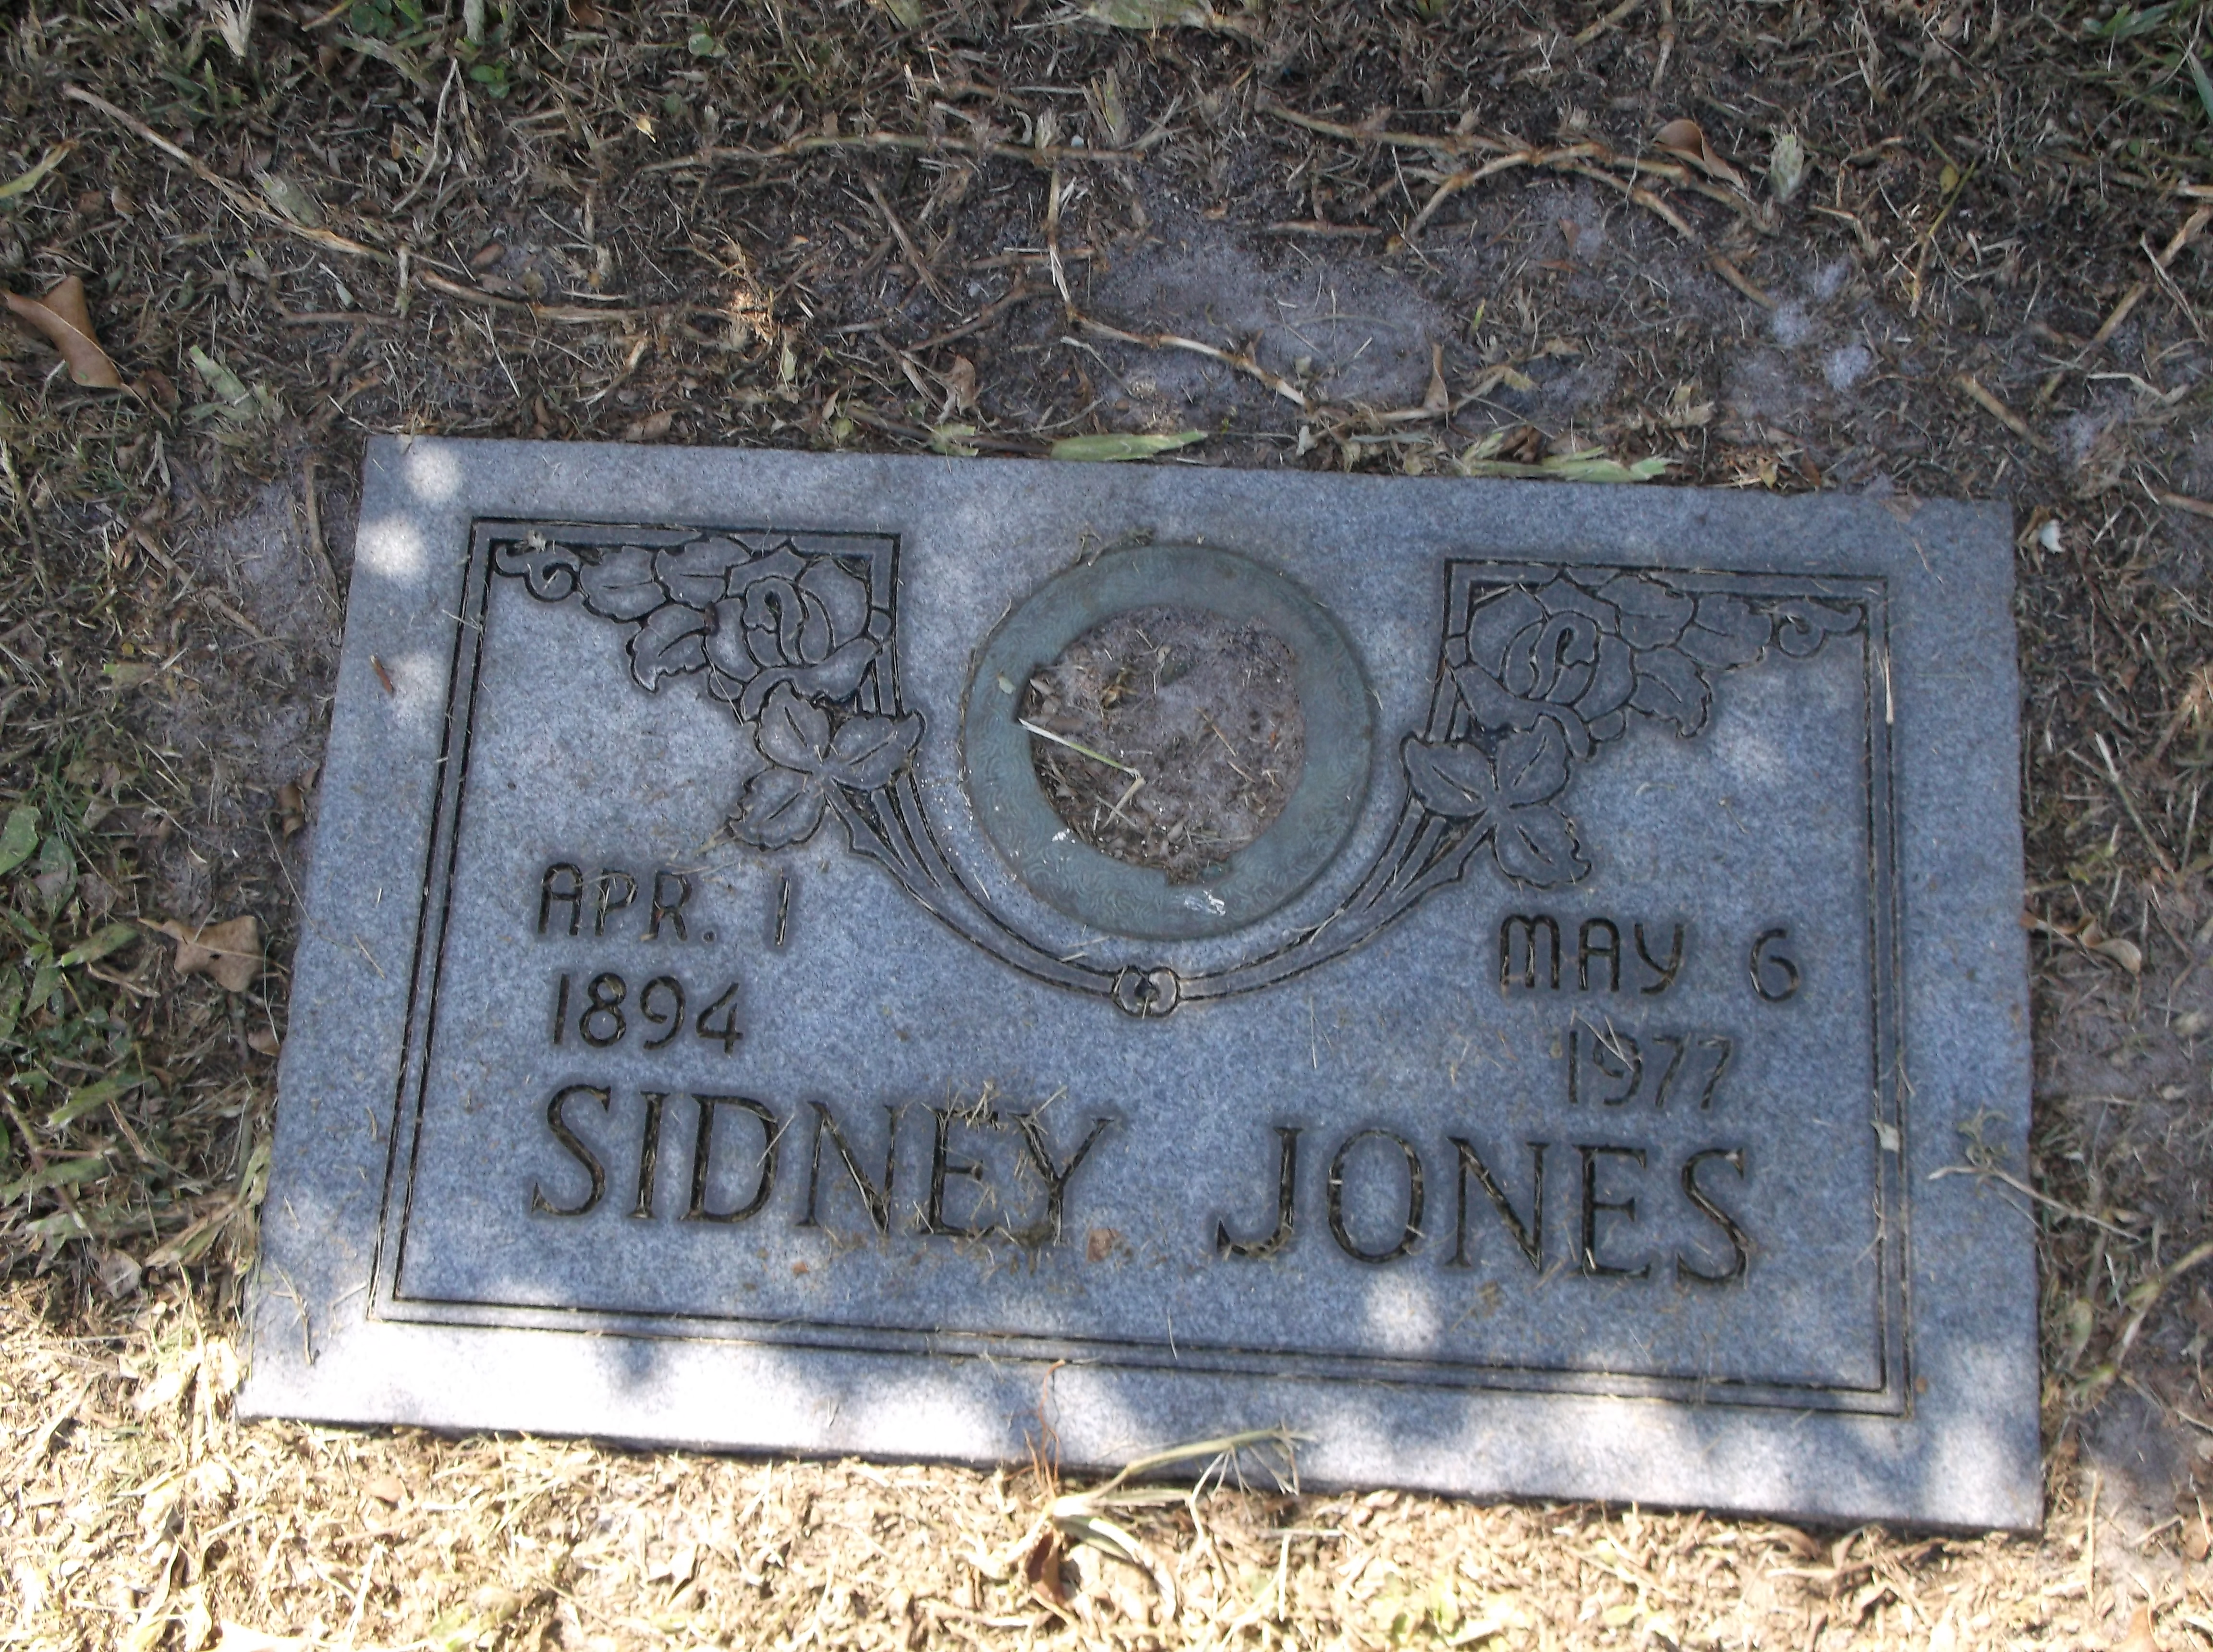 Sidney Jones